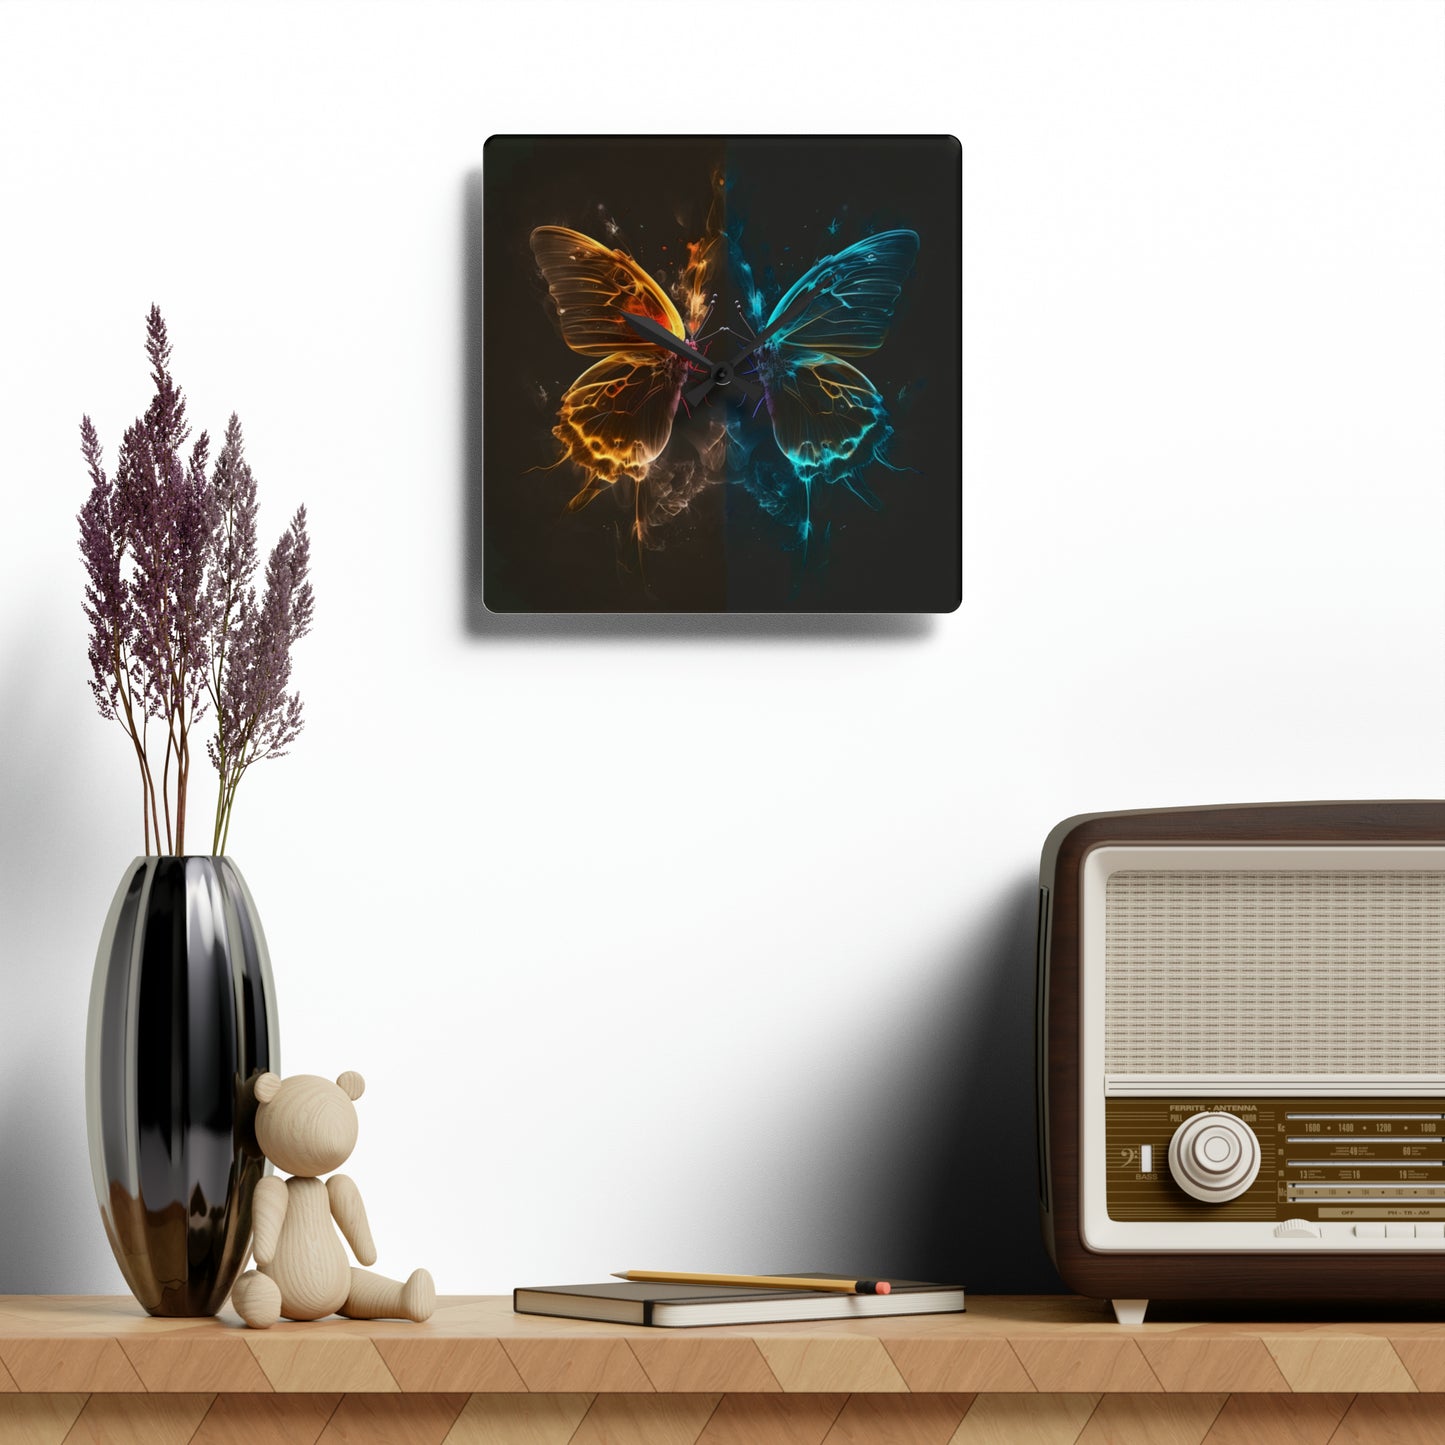 Acrylic Wall Clock Kiss Neon Butterfly 7